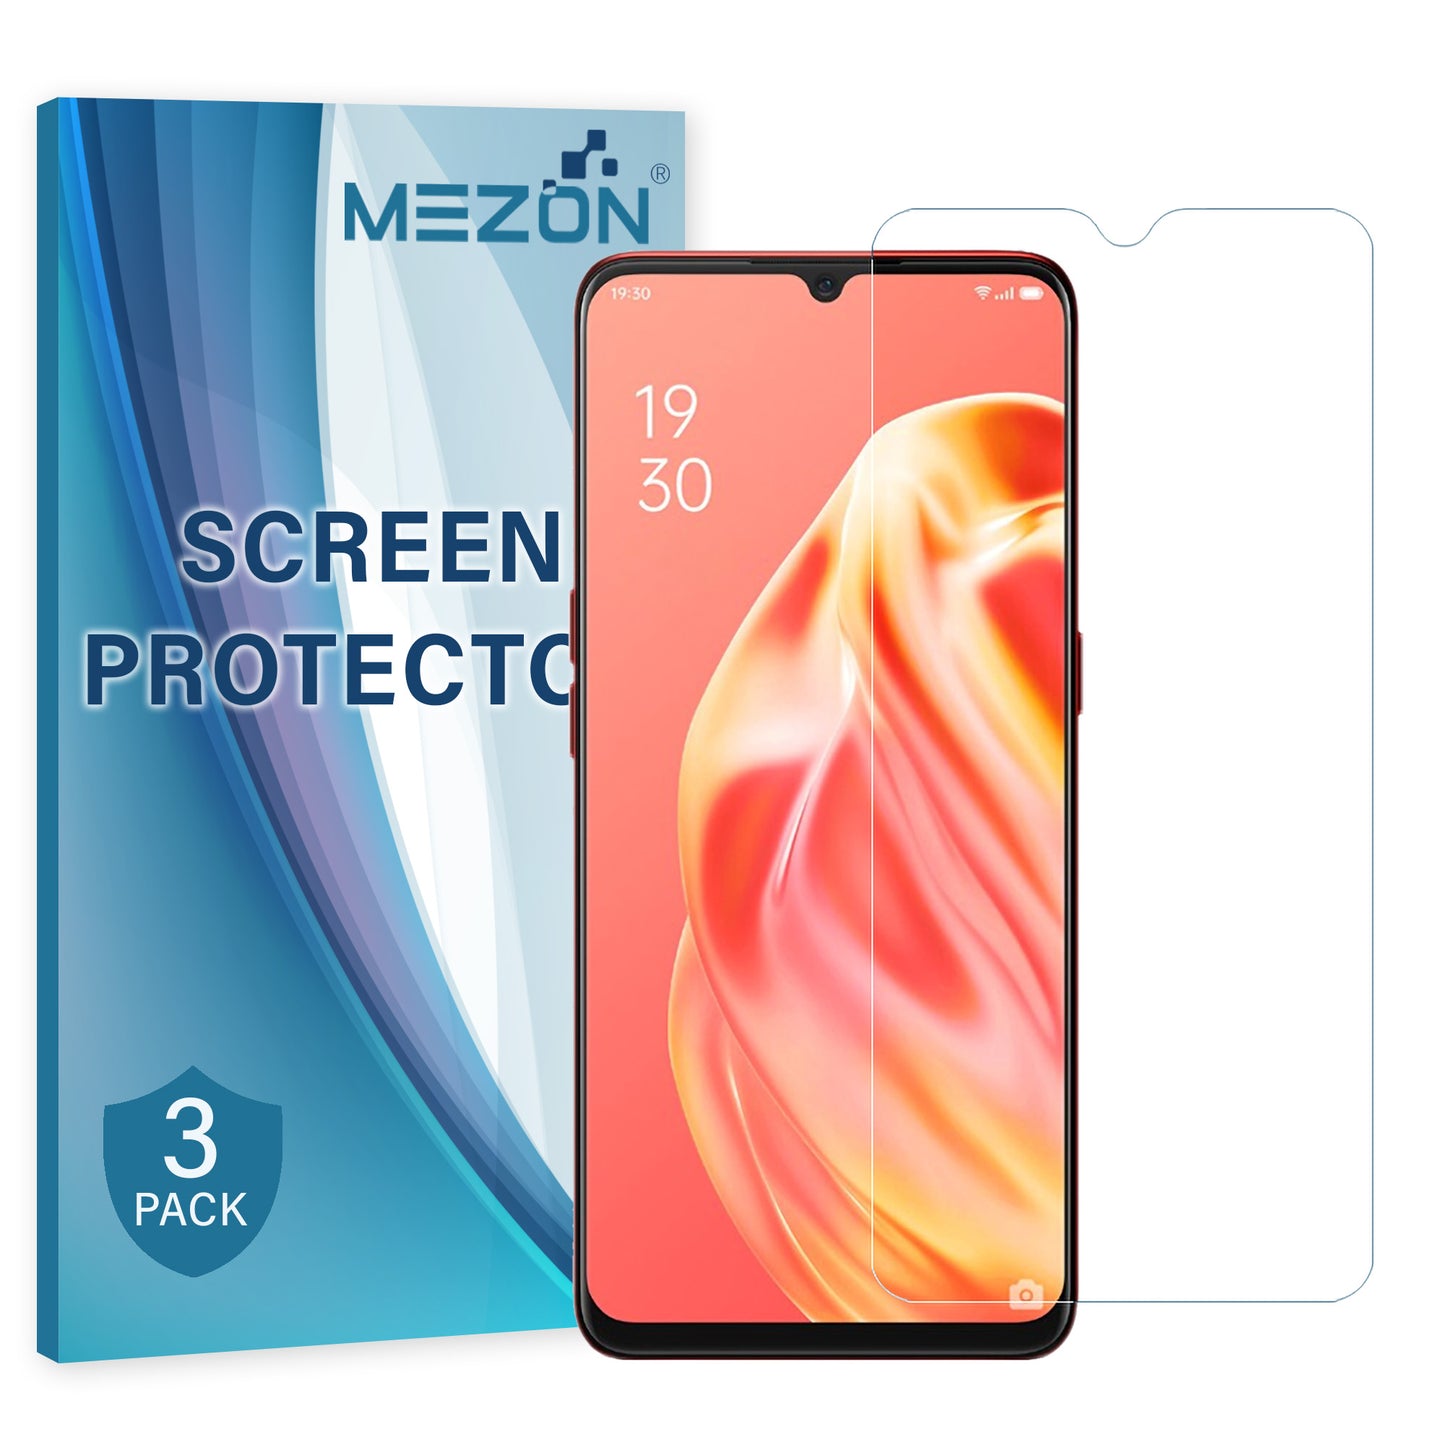 [3 Pack] MEZON Vivo S1 Anti-Glare Matte Screen Protector Case Friendly Film (Vivo S1, Matte)